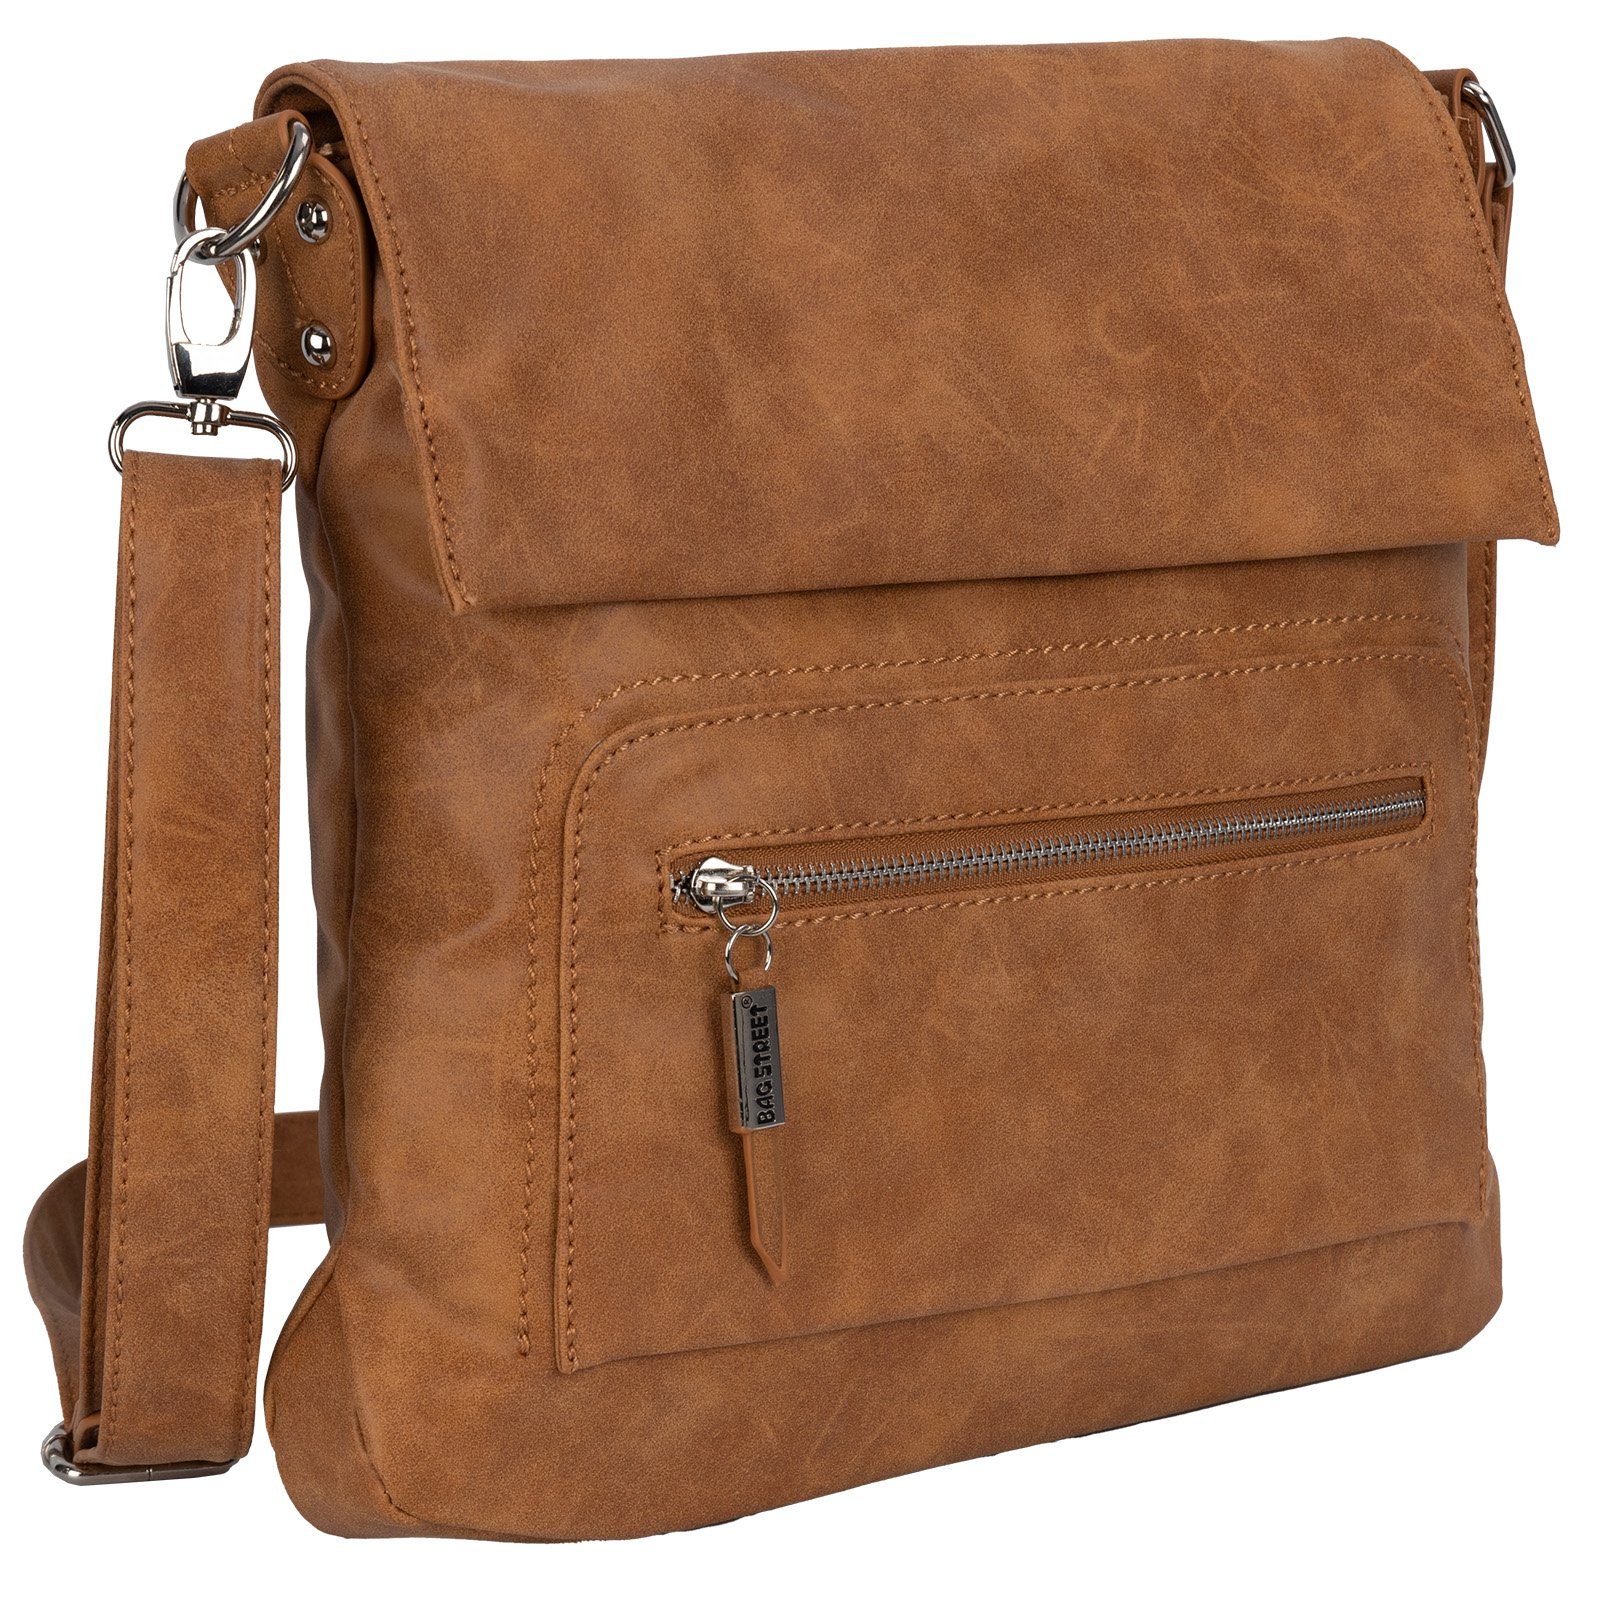 Schlüsseltasche Umhängetasche Street Handtasche Damentasche STREET tragbar COGNAC Schultertasche als BAG Umhängetasche Bag Schultertasche, T0103,